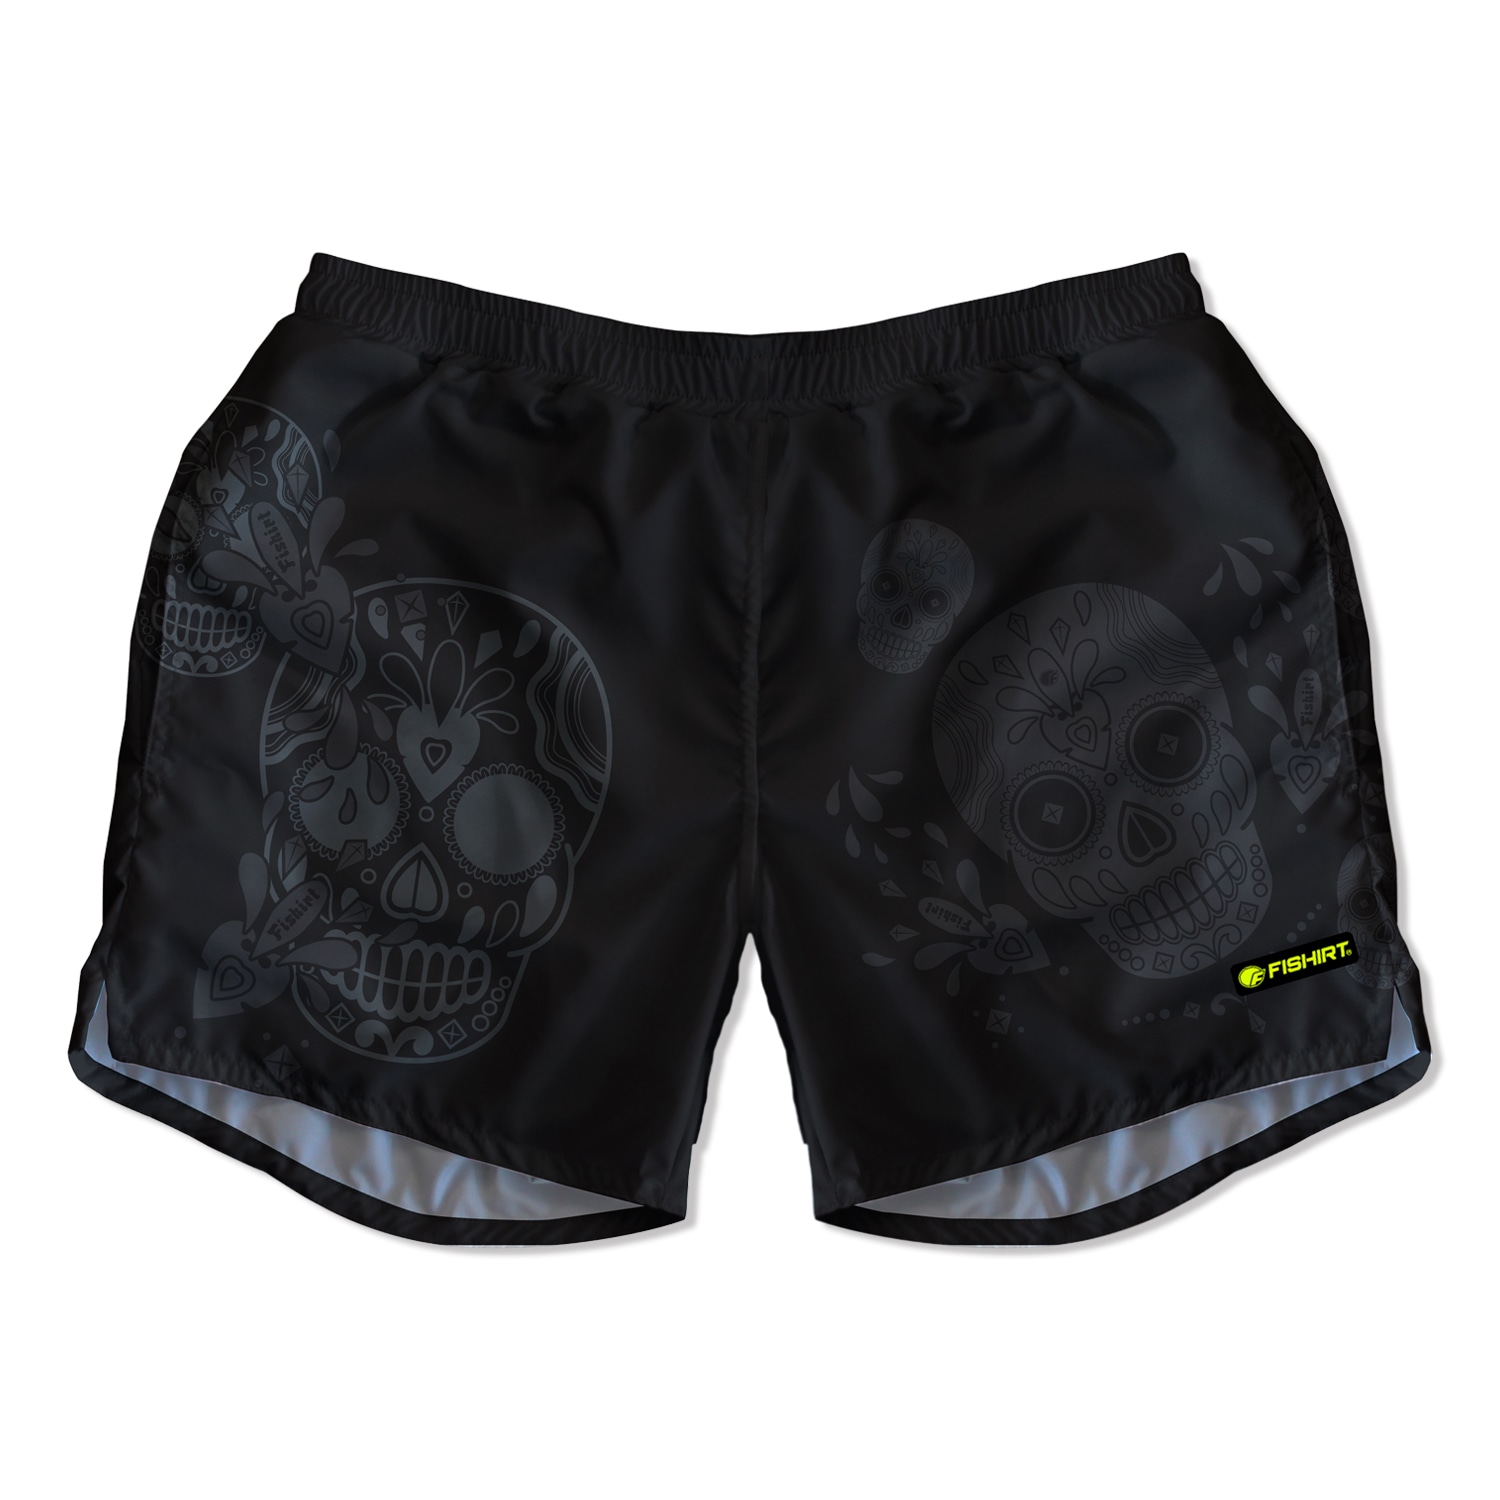 Men’s Swim Shorts Mexican Skull Graphic - Flatmuertos Style Black Medium Fishirt